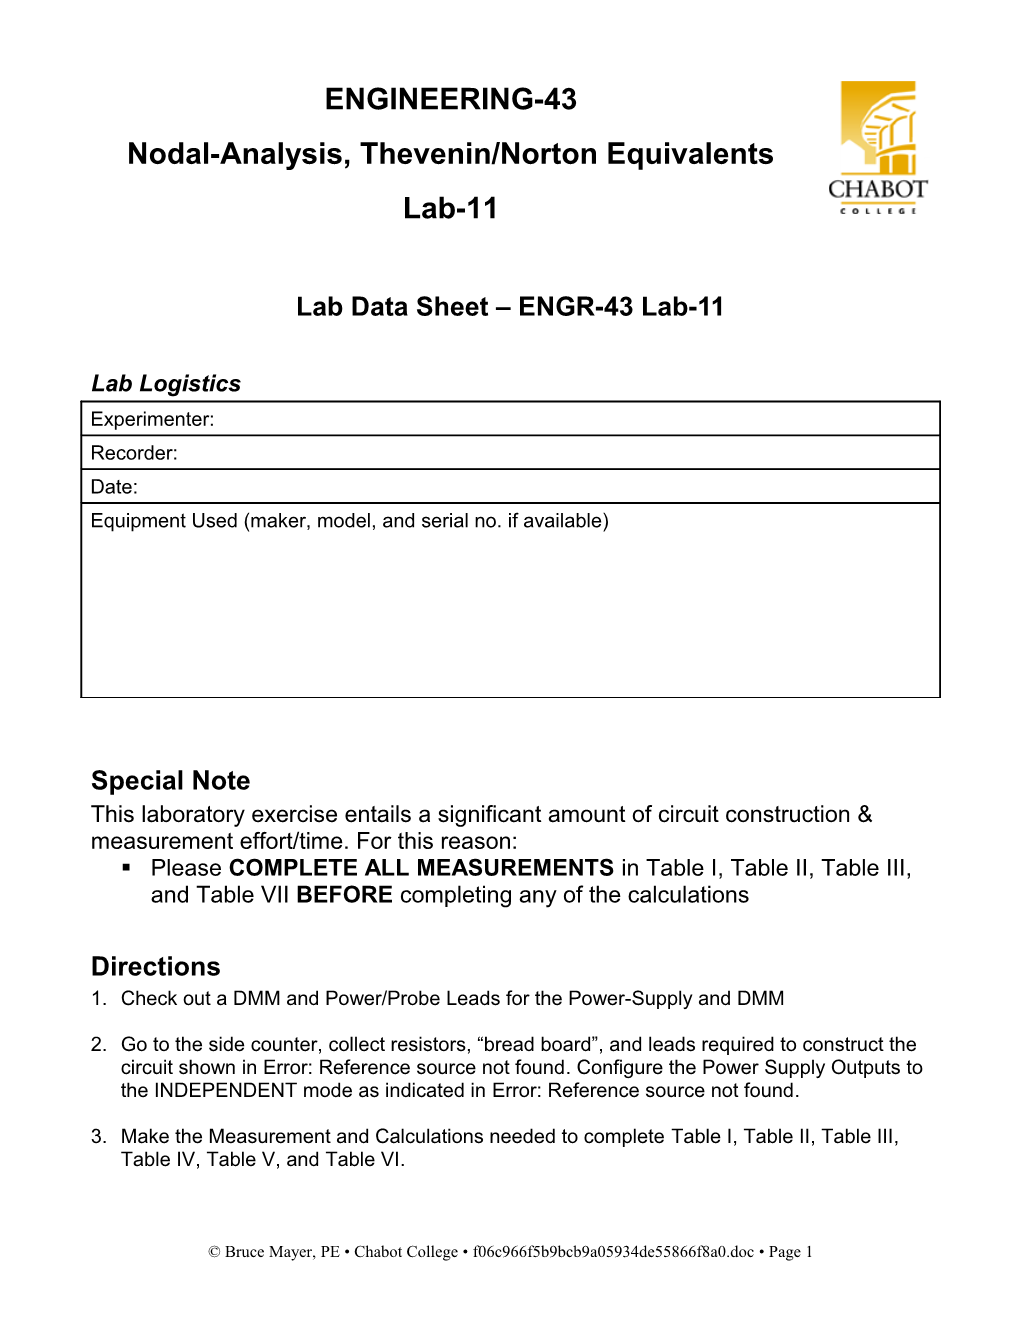 Lab Data Sheet ENGR-43 Lab-11